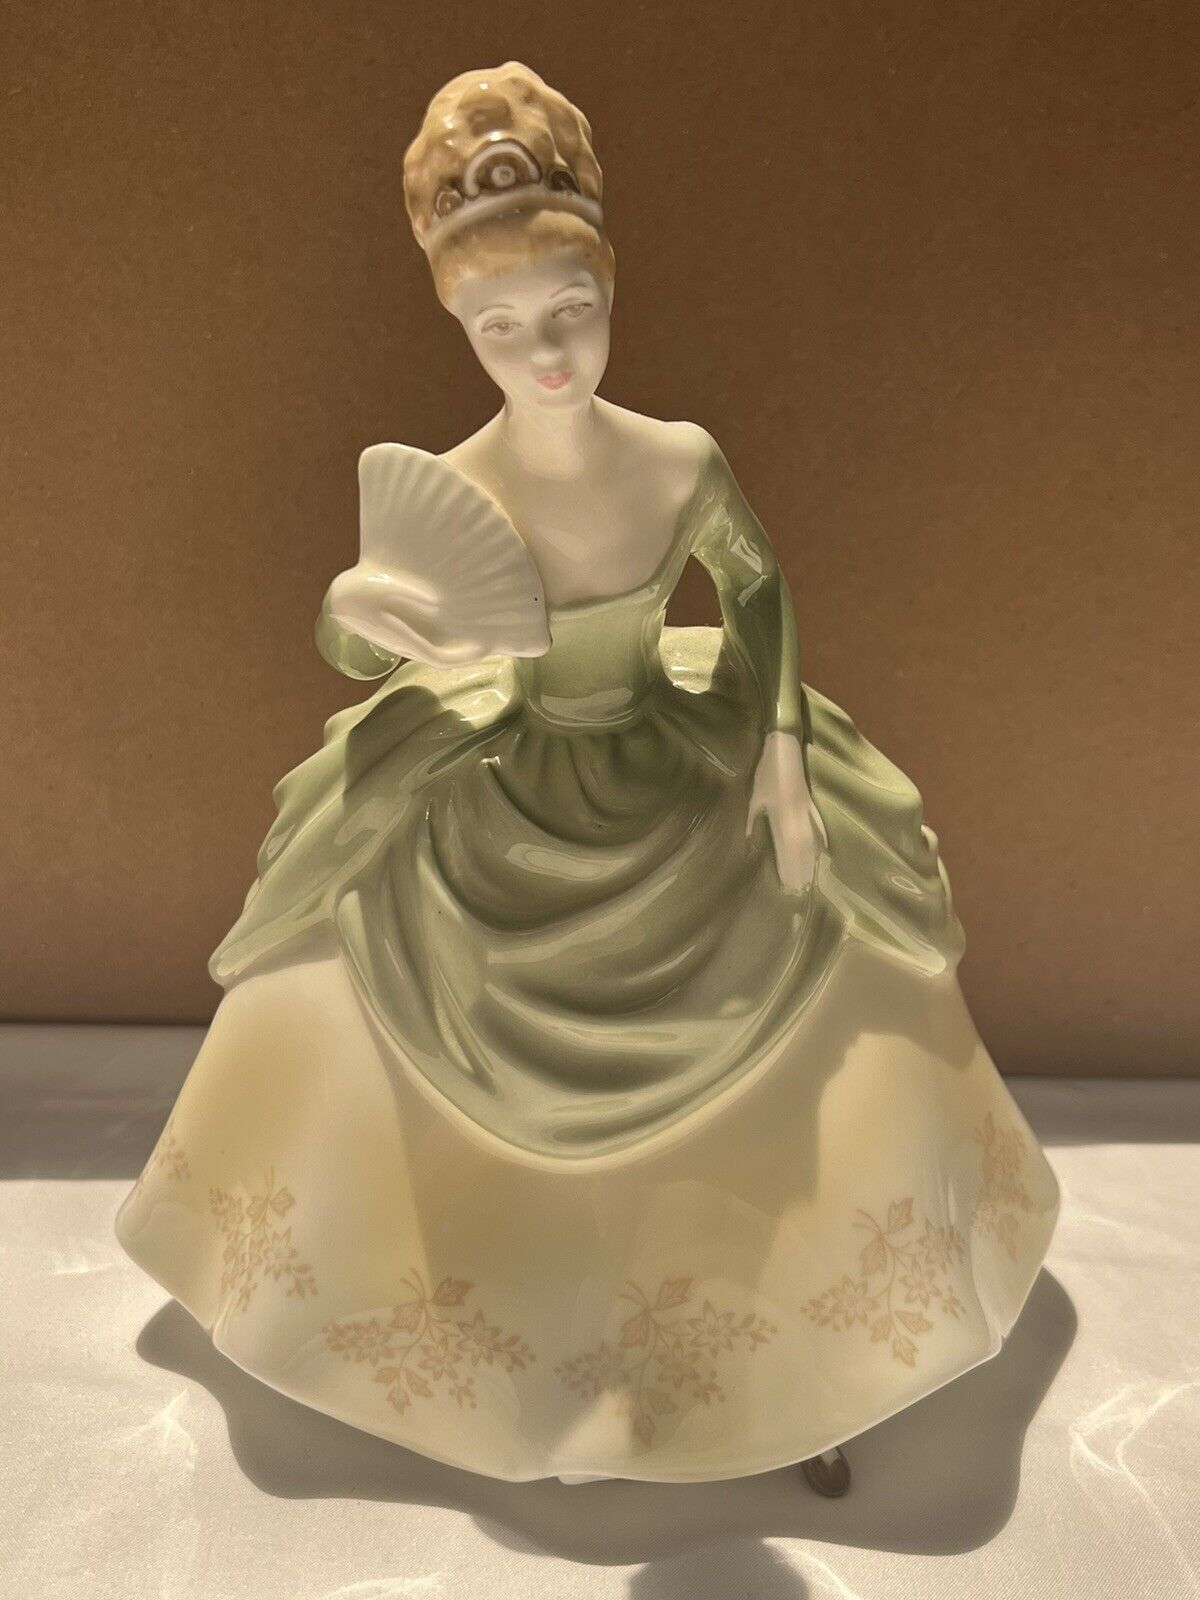 royal doulton “Soire’ figurine ladies collection vintage